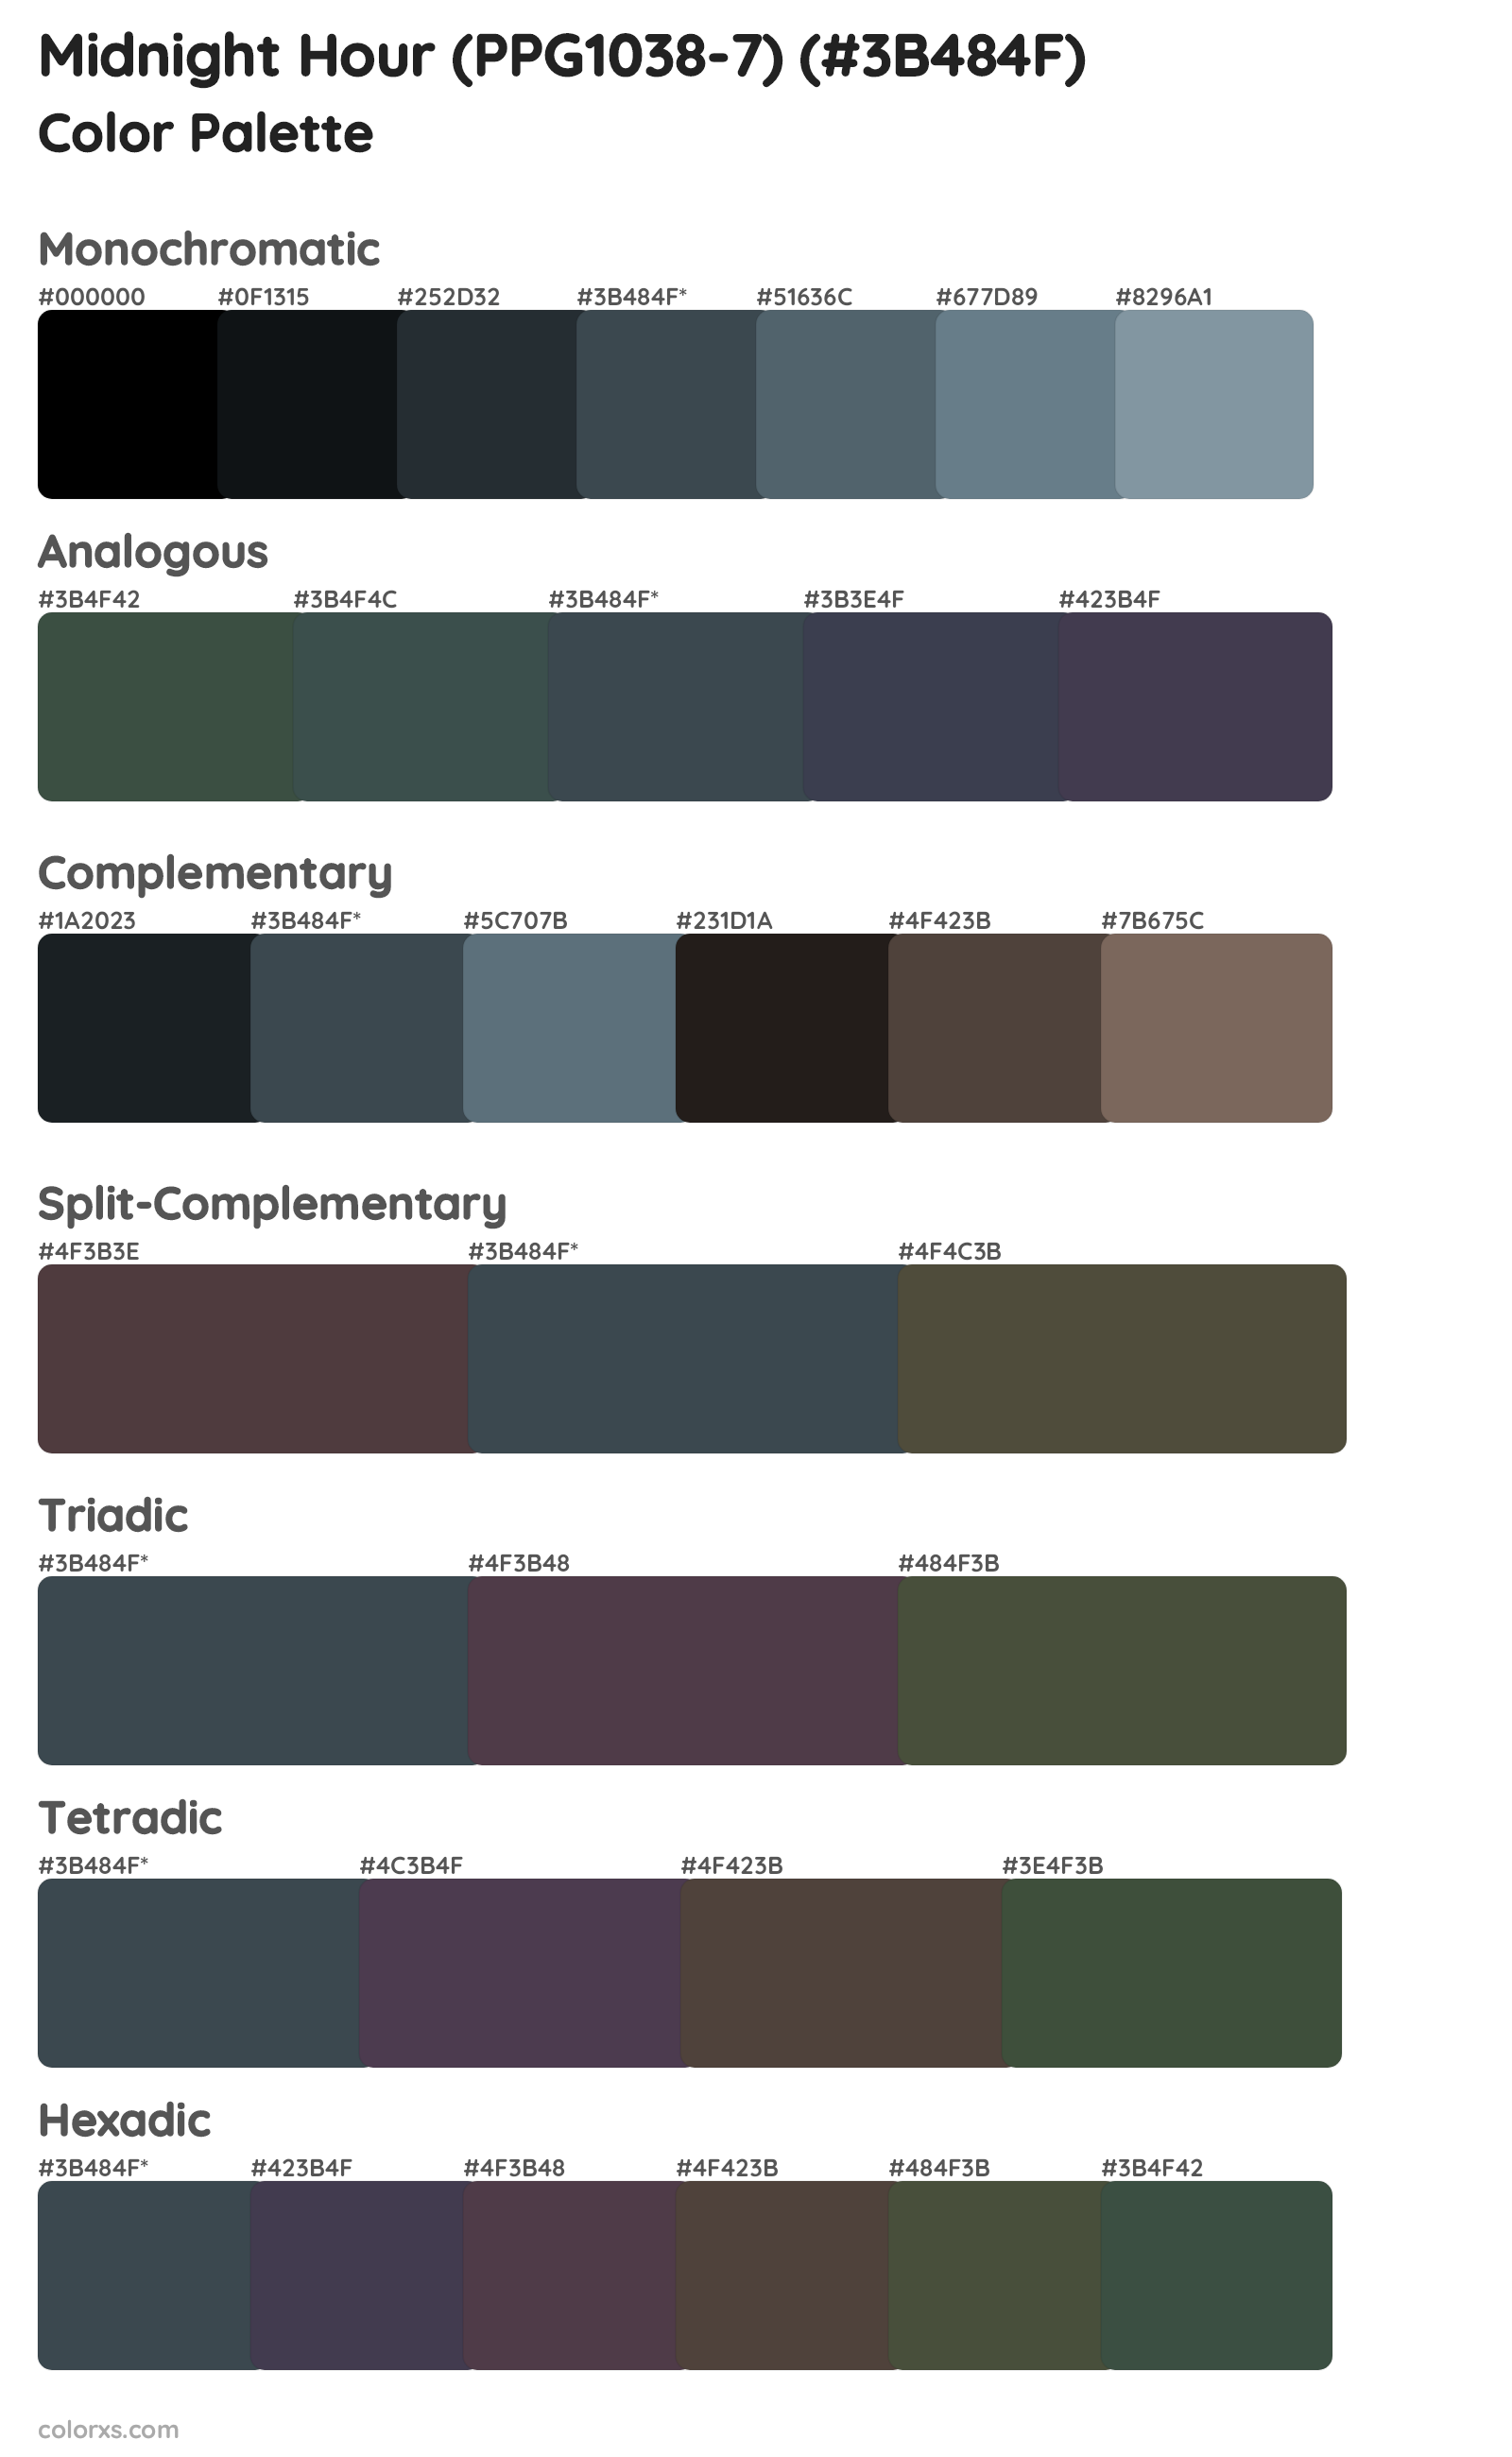 Midnight Hour (PPG1038-7) Color Scheme Palettes